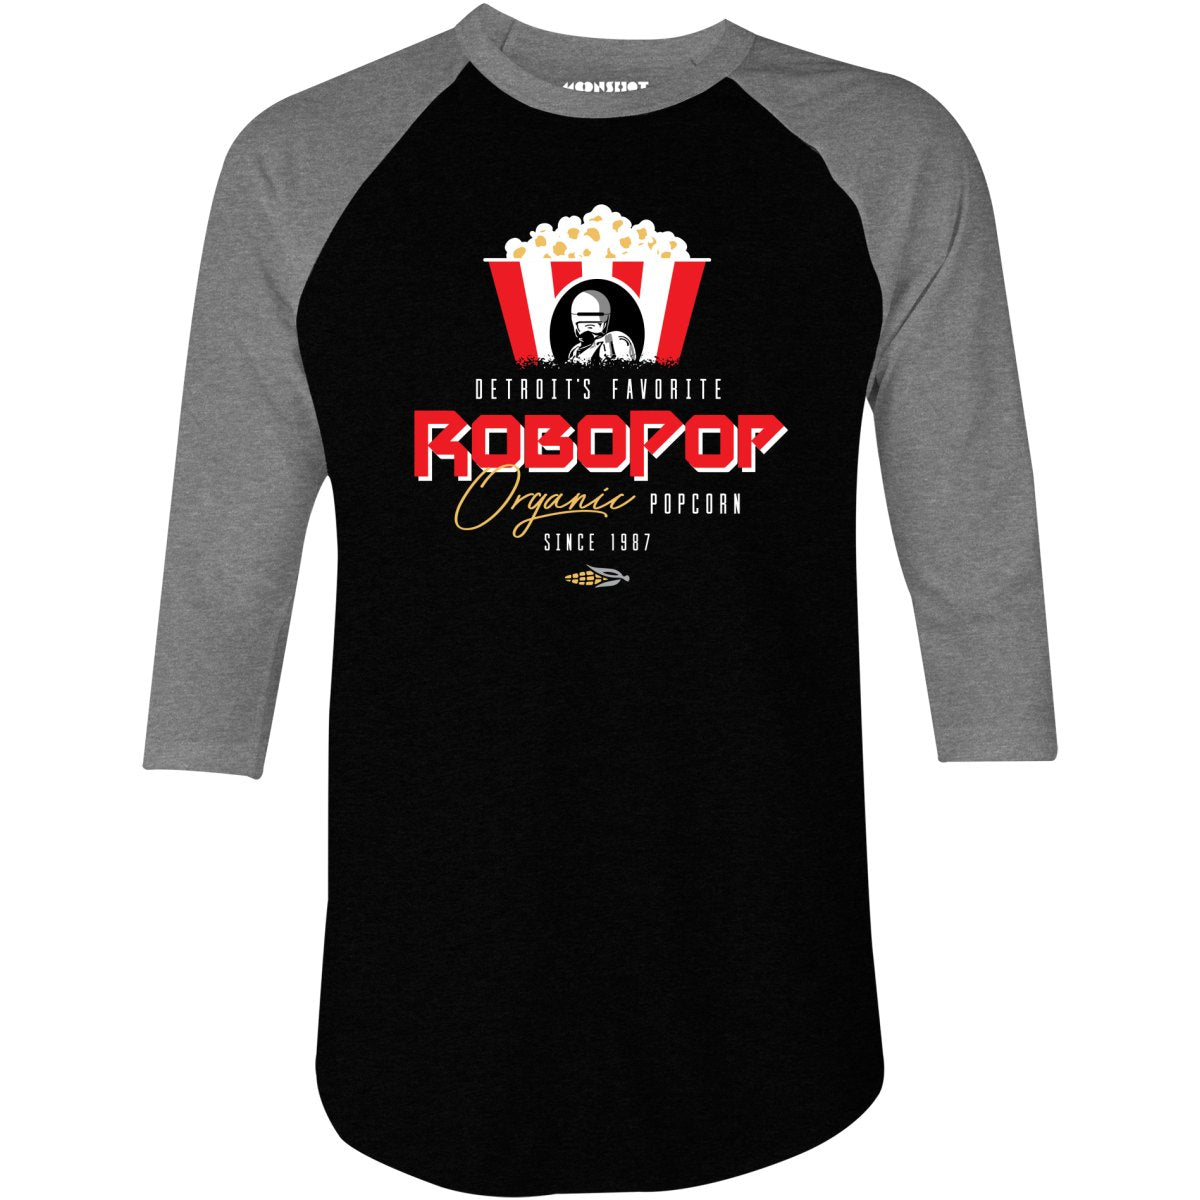 Robopop Organic Popcorn - 3/4 Sleeve Raglan T-Shirt